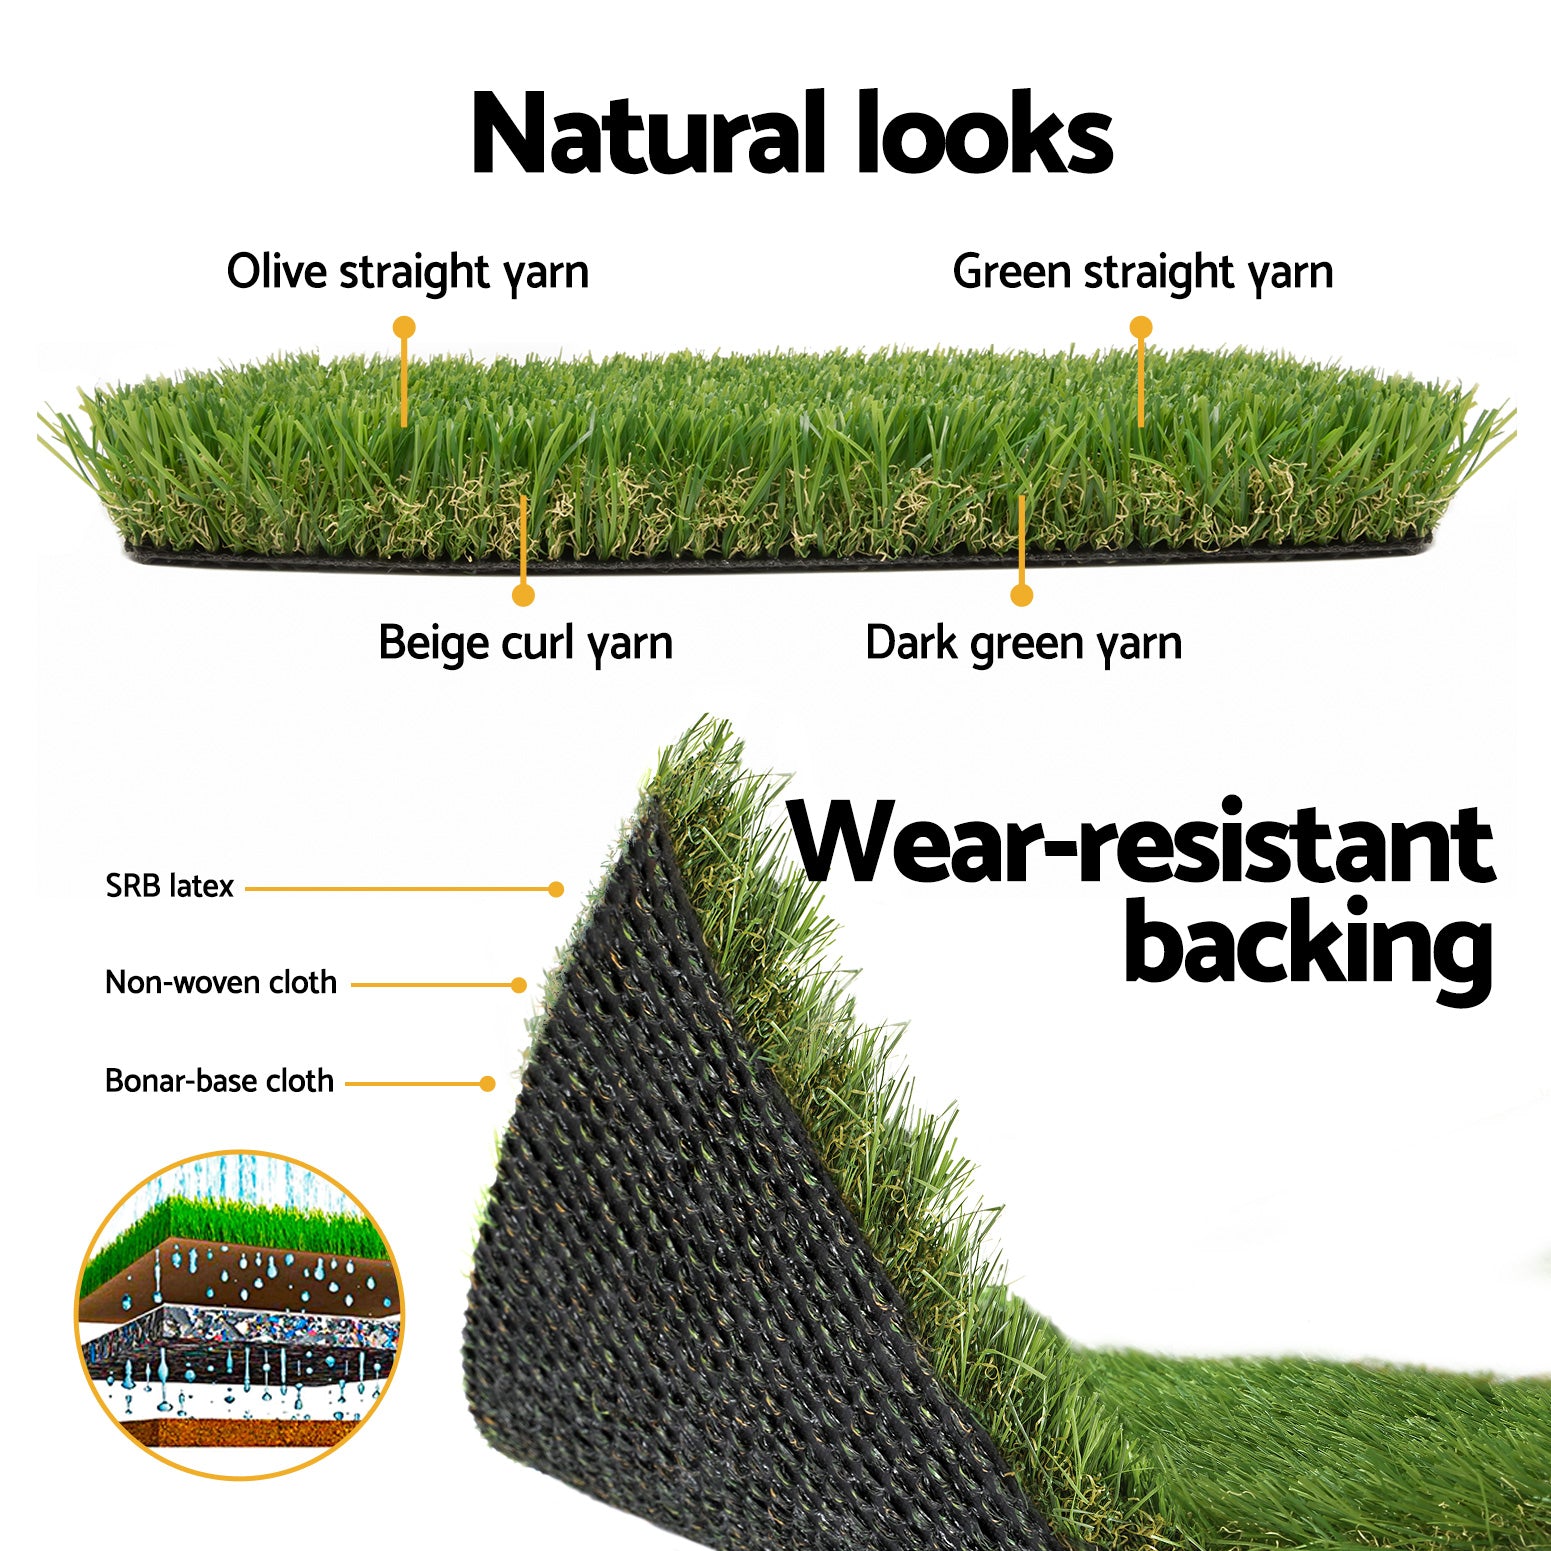 Primeturf Artificial Grass 30mm 2mx5m 20SQM Synthetic Fake Lawn Turf Plastic Plant 4-coloured